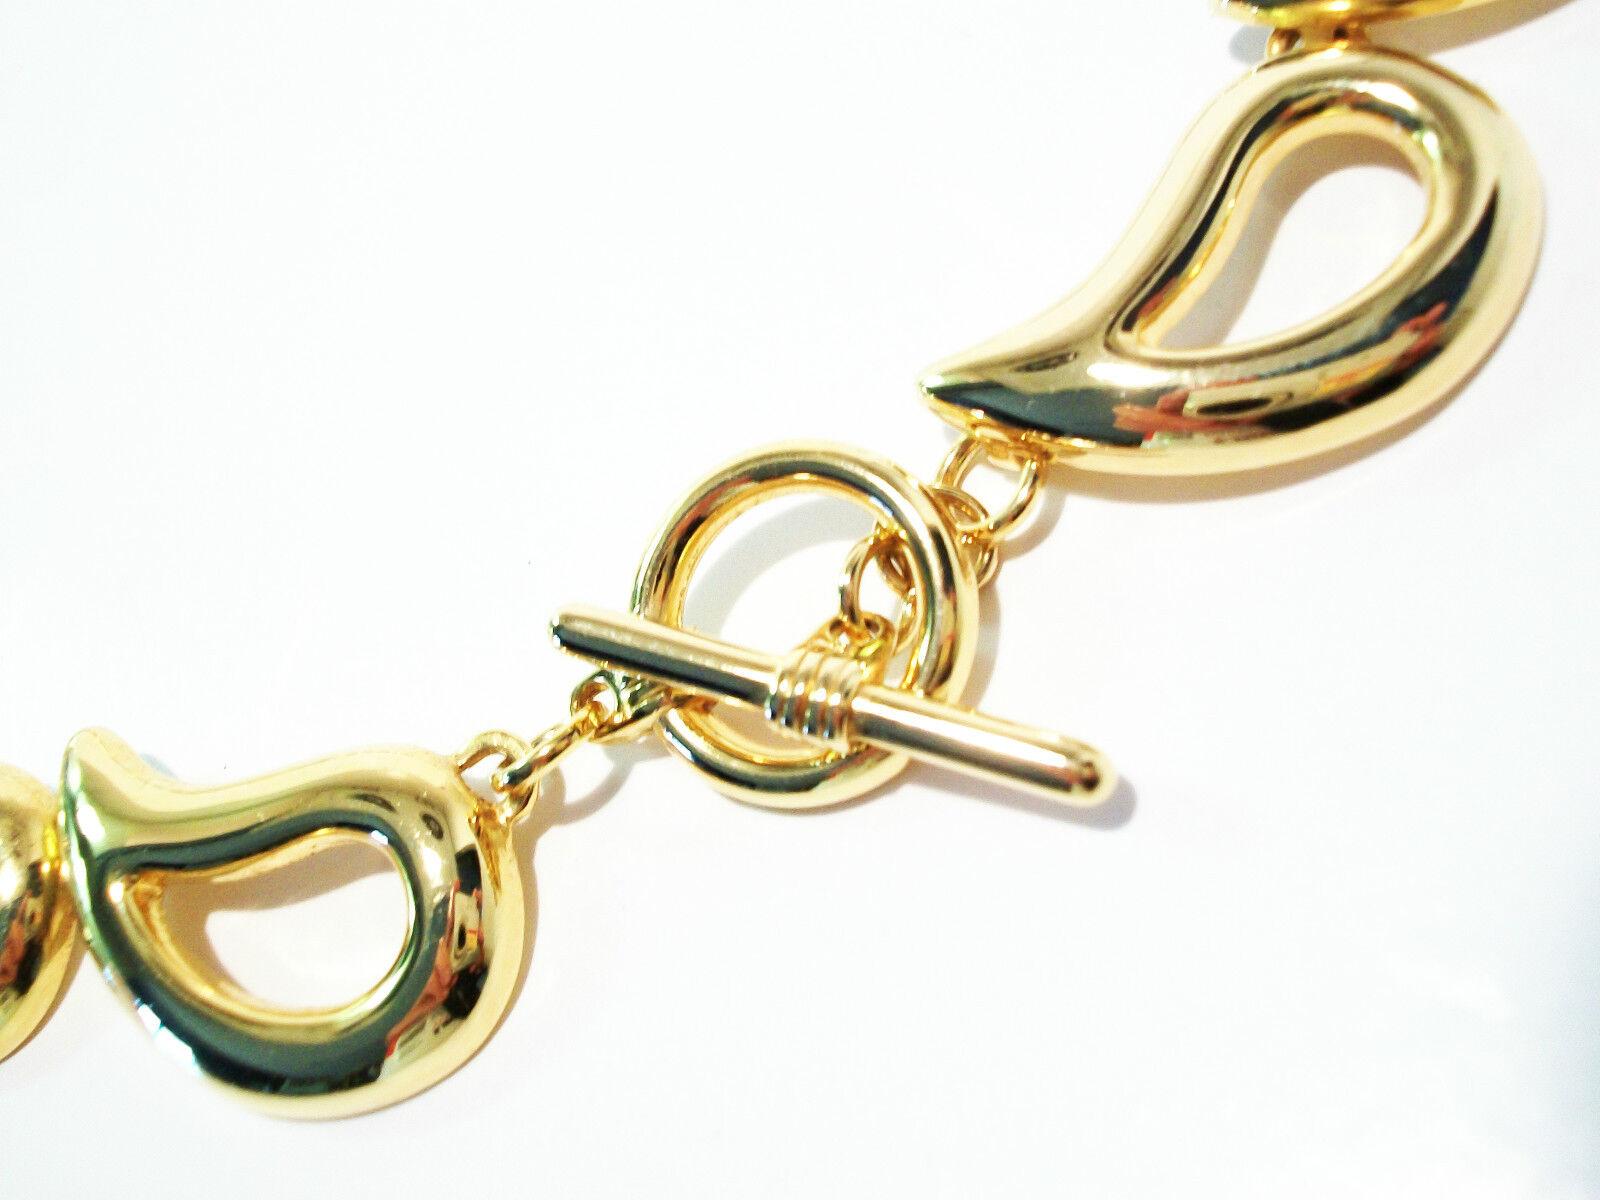 Vintage Gold Tone Teardrop Design Necklace - Toggle Closure - Unsigned - C. 1980 For Sale 2